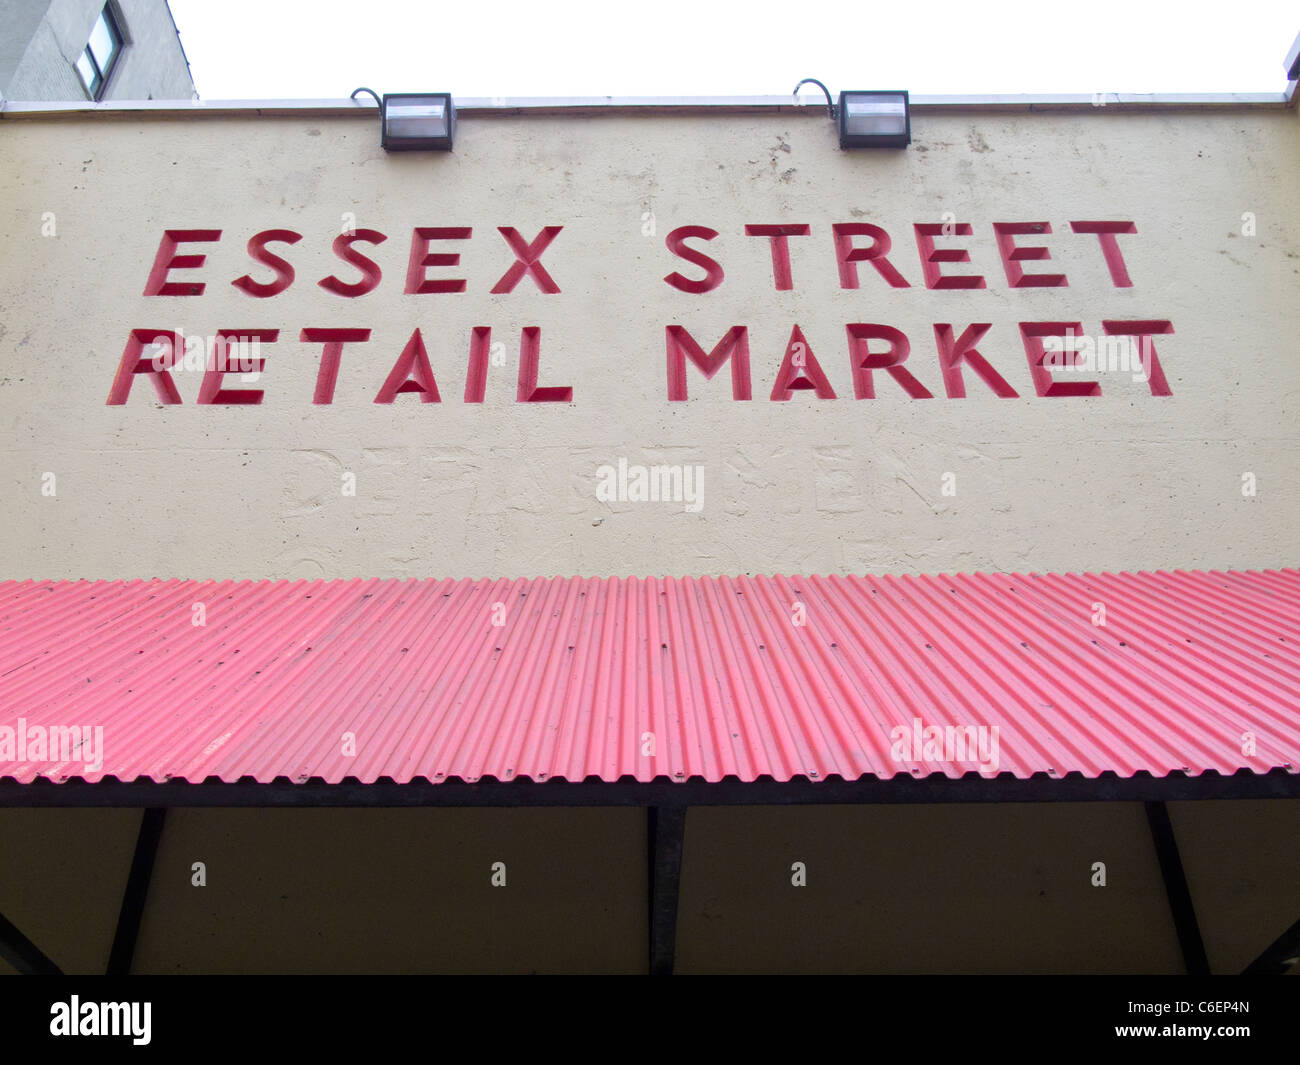 Essex Street Retail Market sign Stock Photo